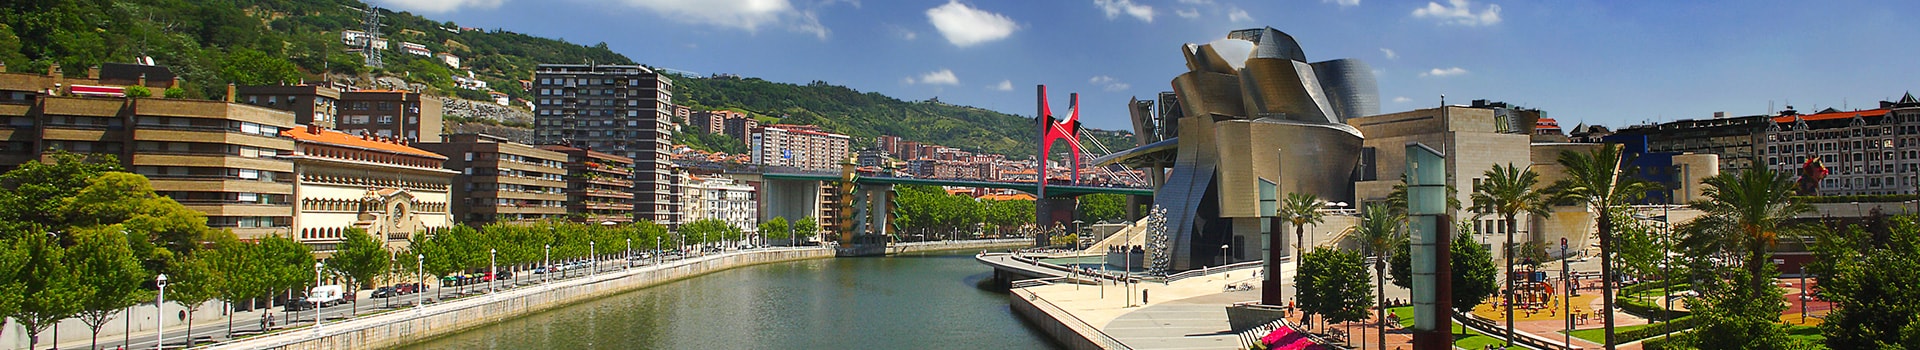 São paulo - Bilbao